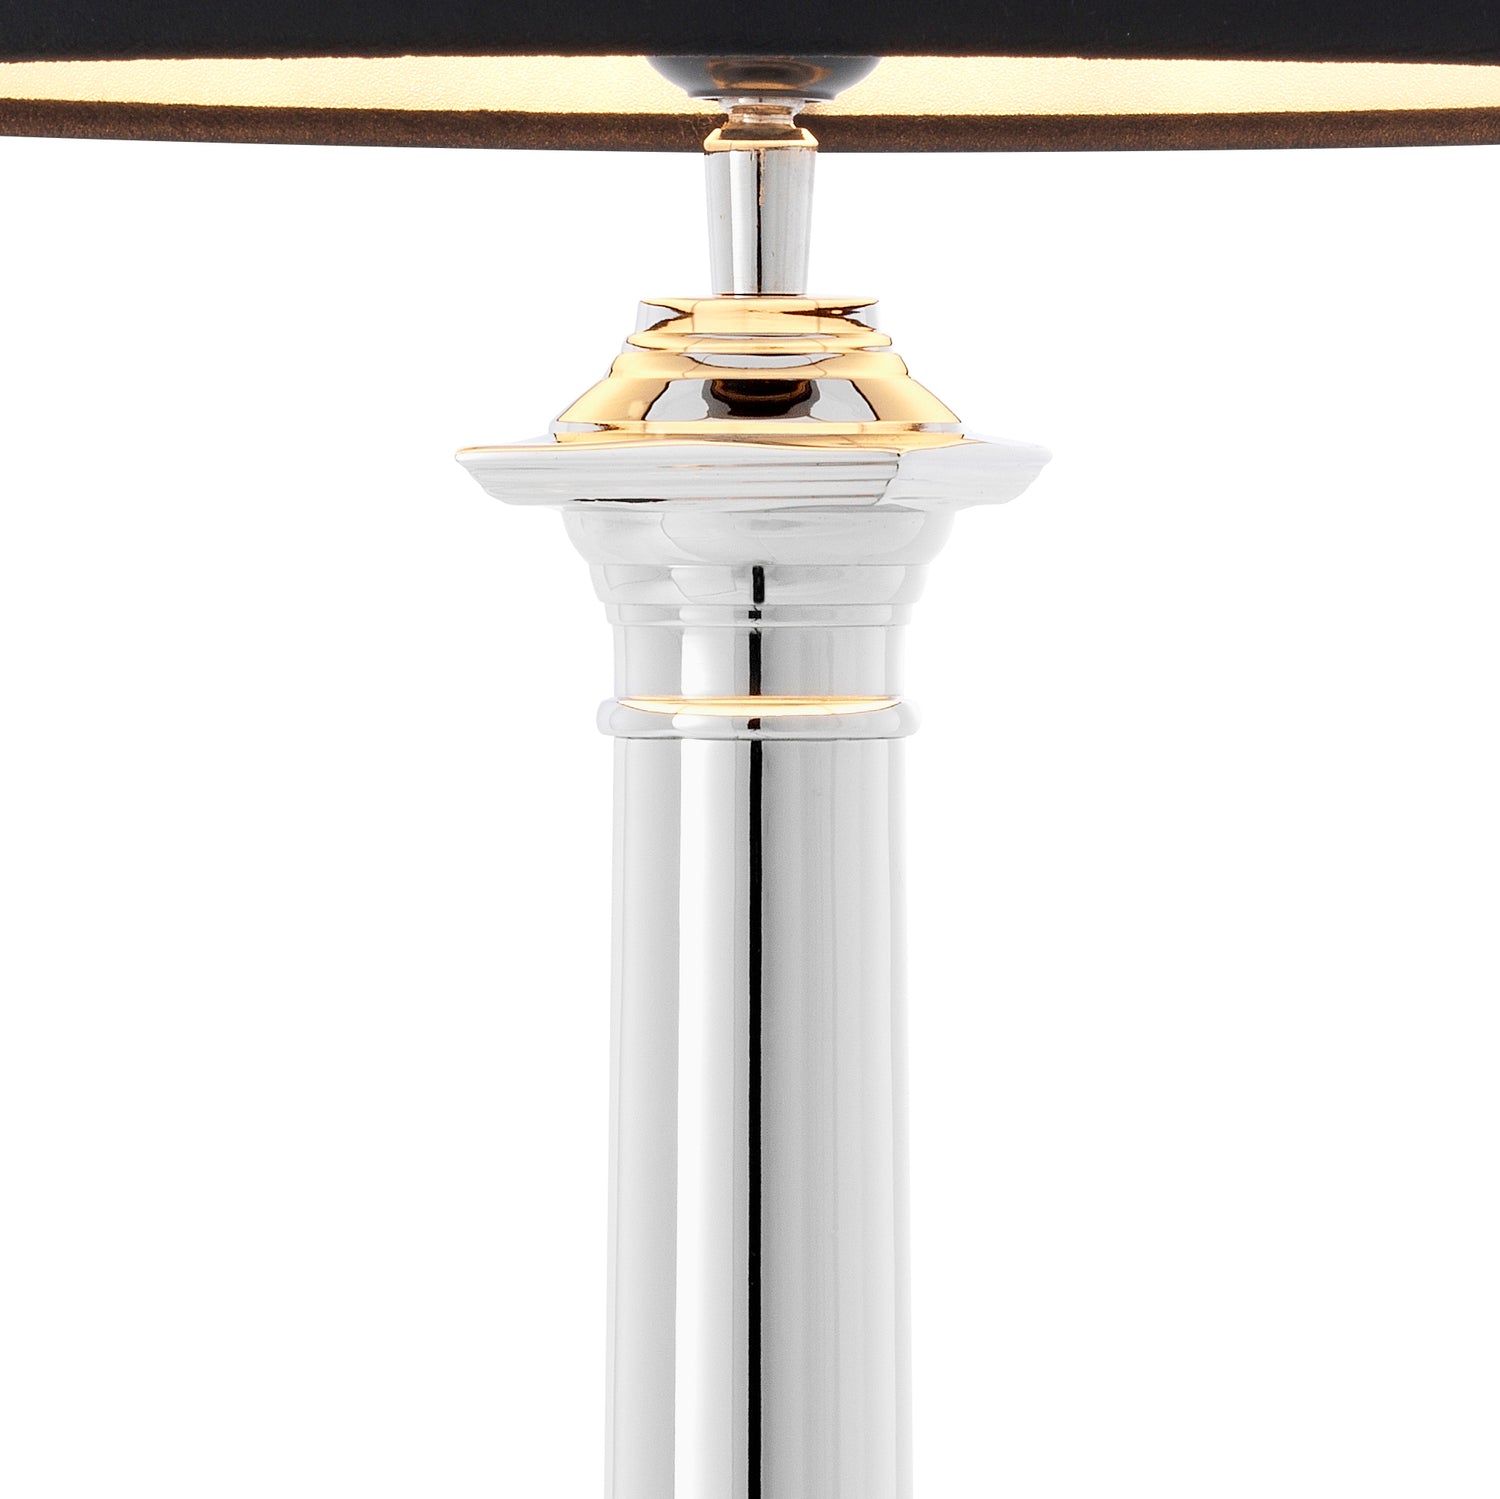  Eichholtz-Eichholtz Cologne L Table Lamp Nickel Finish inc Shade-Silver 77 